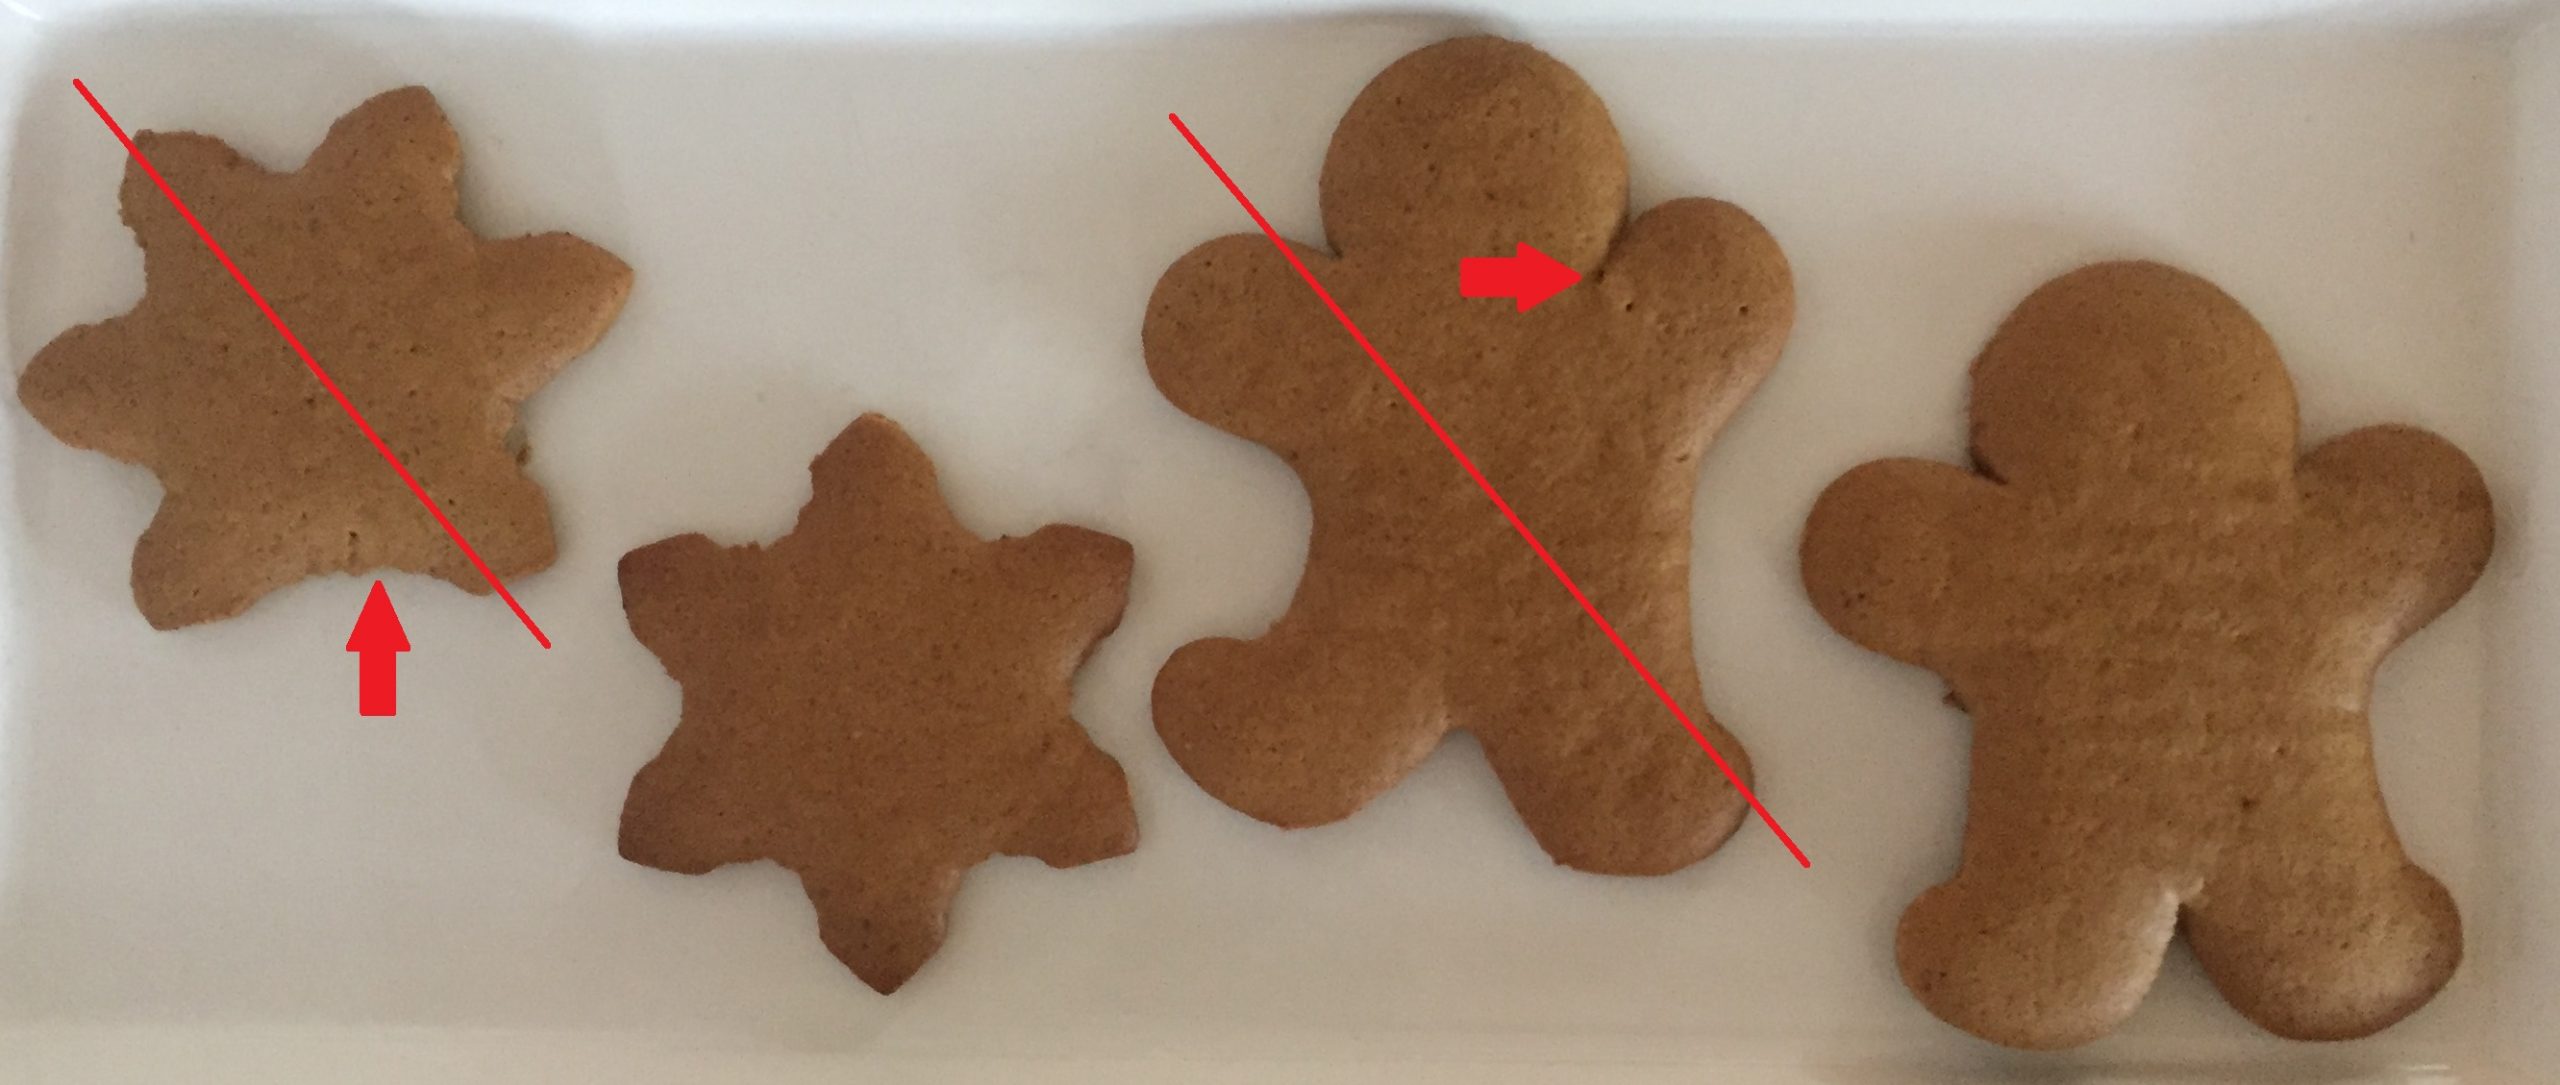 Gingerbread cookie comparison